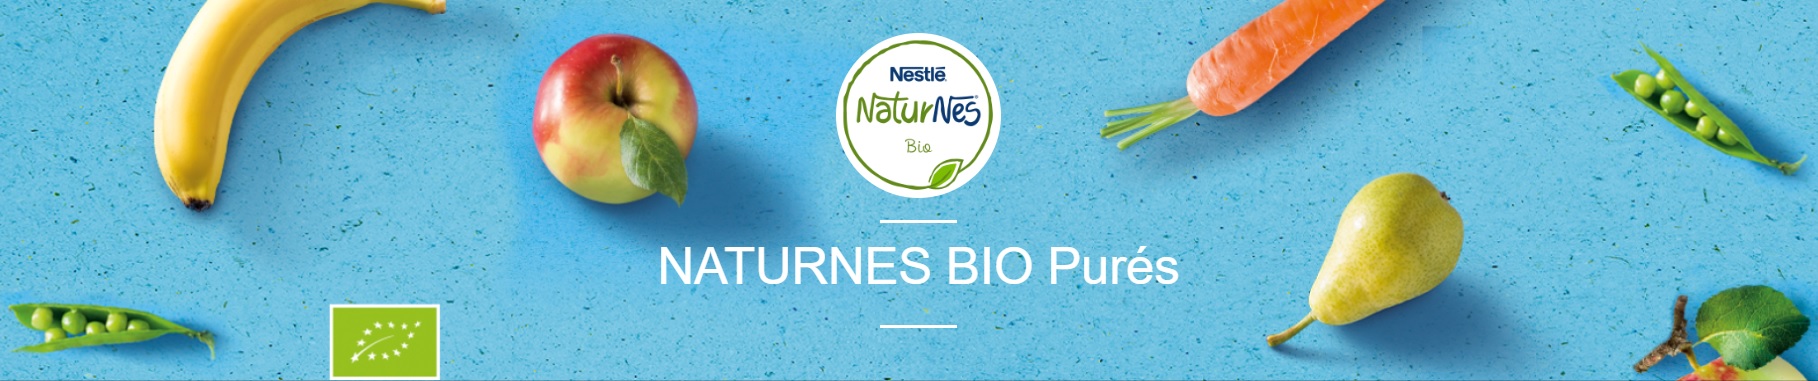 Nestlé Naturnes BIO Purees